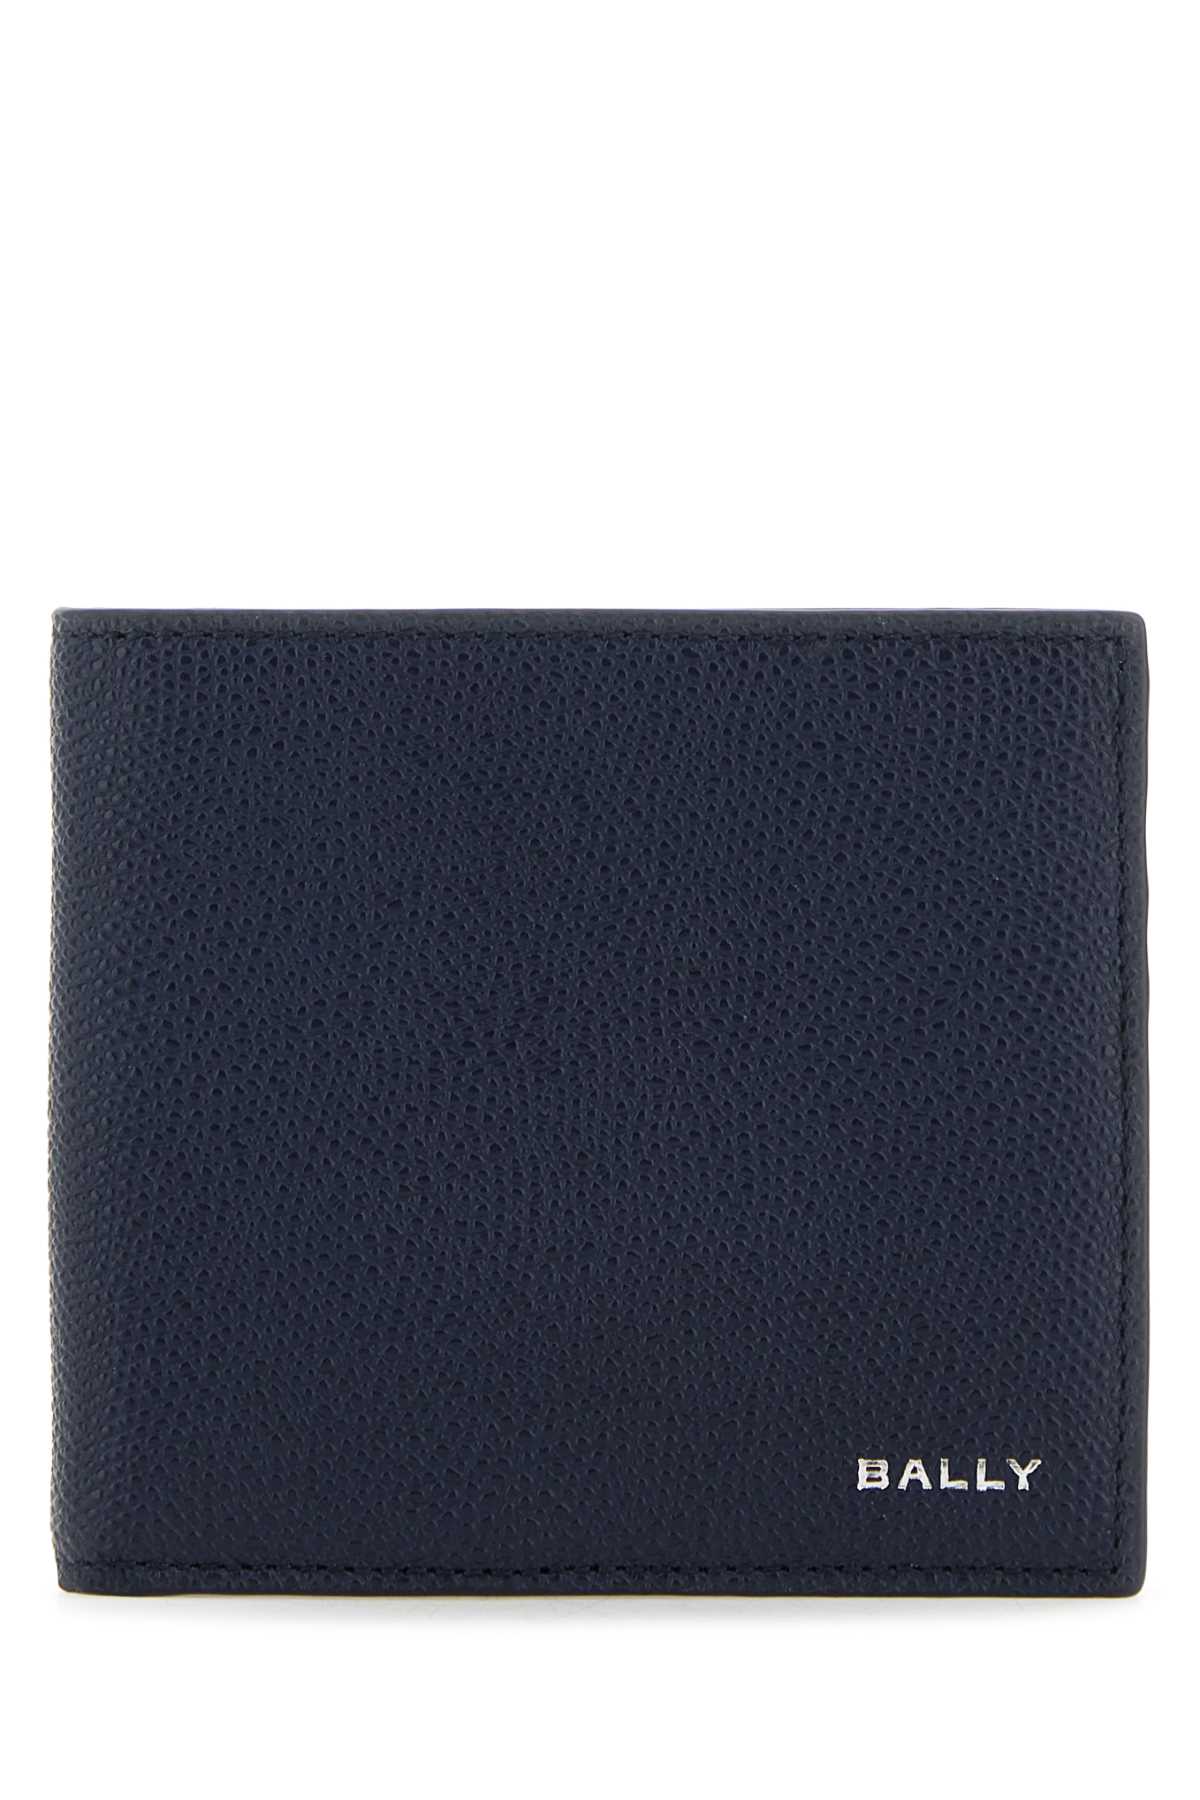 Bally Slate Leather Flag Wallet